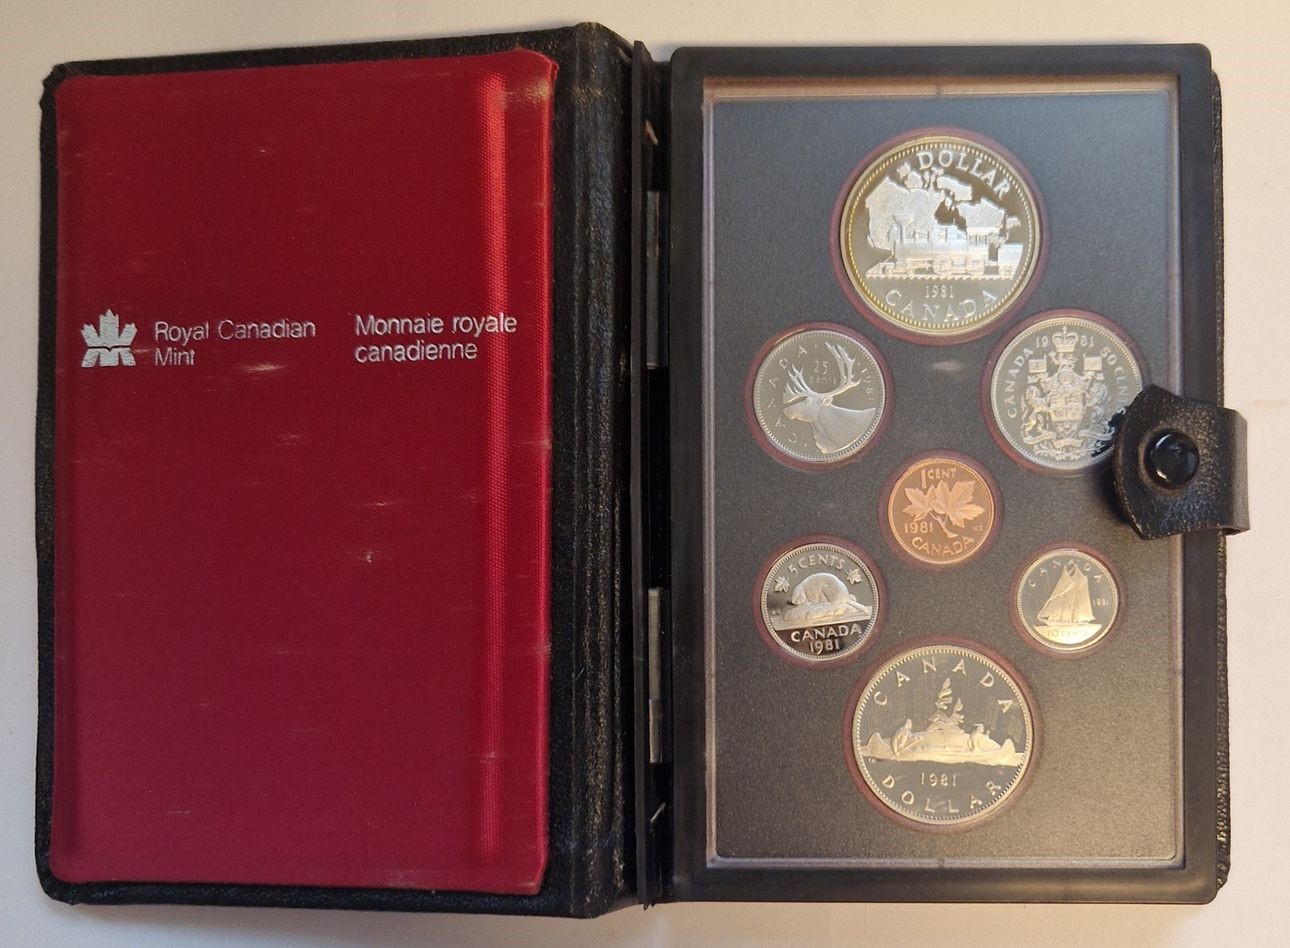  Kanada KMS 1981 1 Cent -1 Dollar Royal Canadian Mint Münzenankauf Koblenz Frank Maurer AD154   